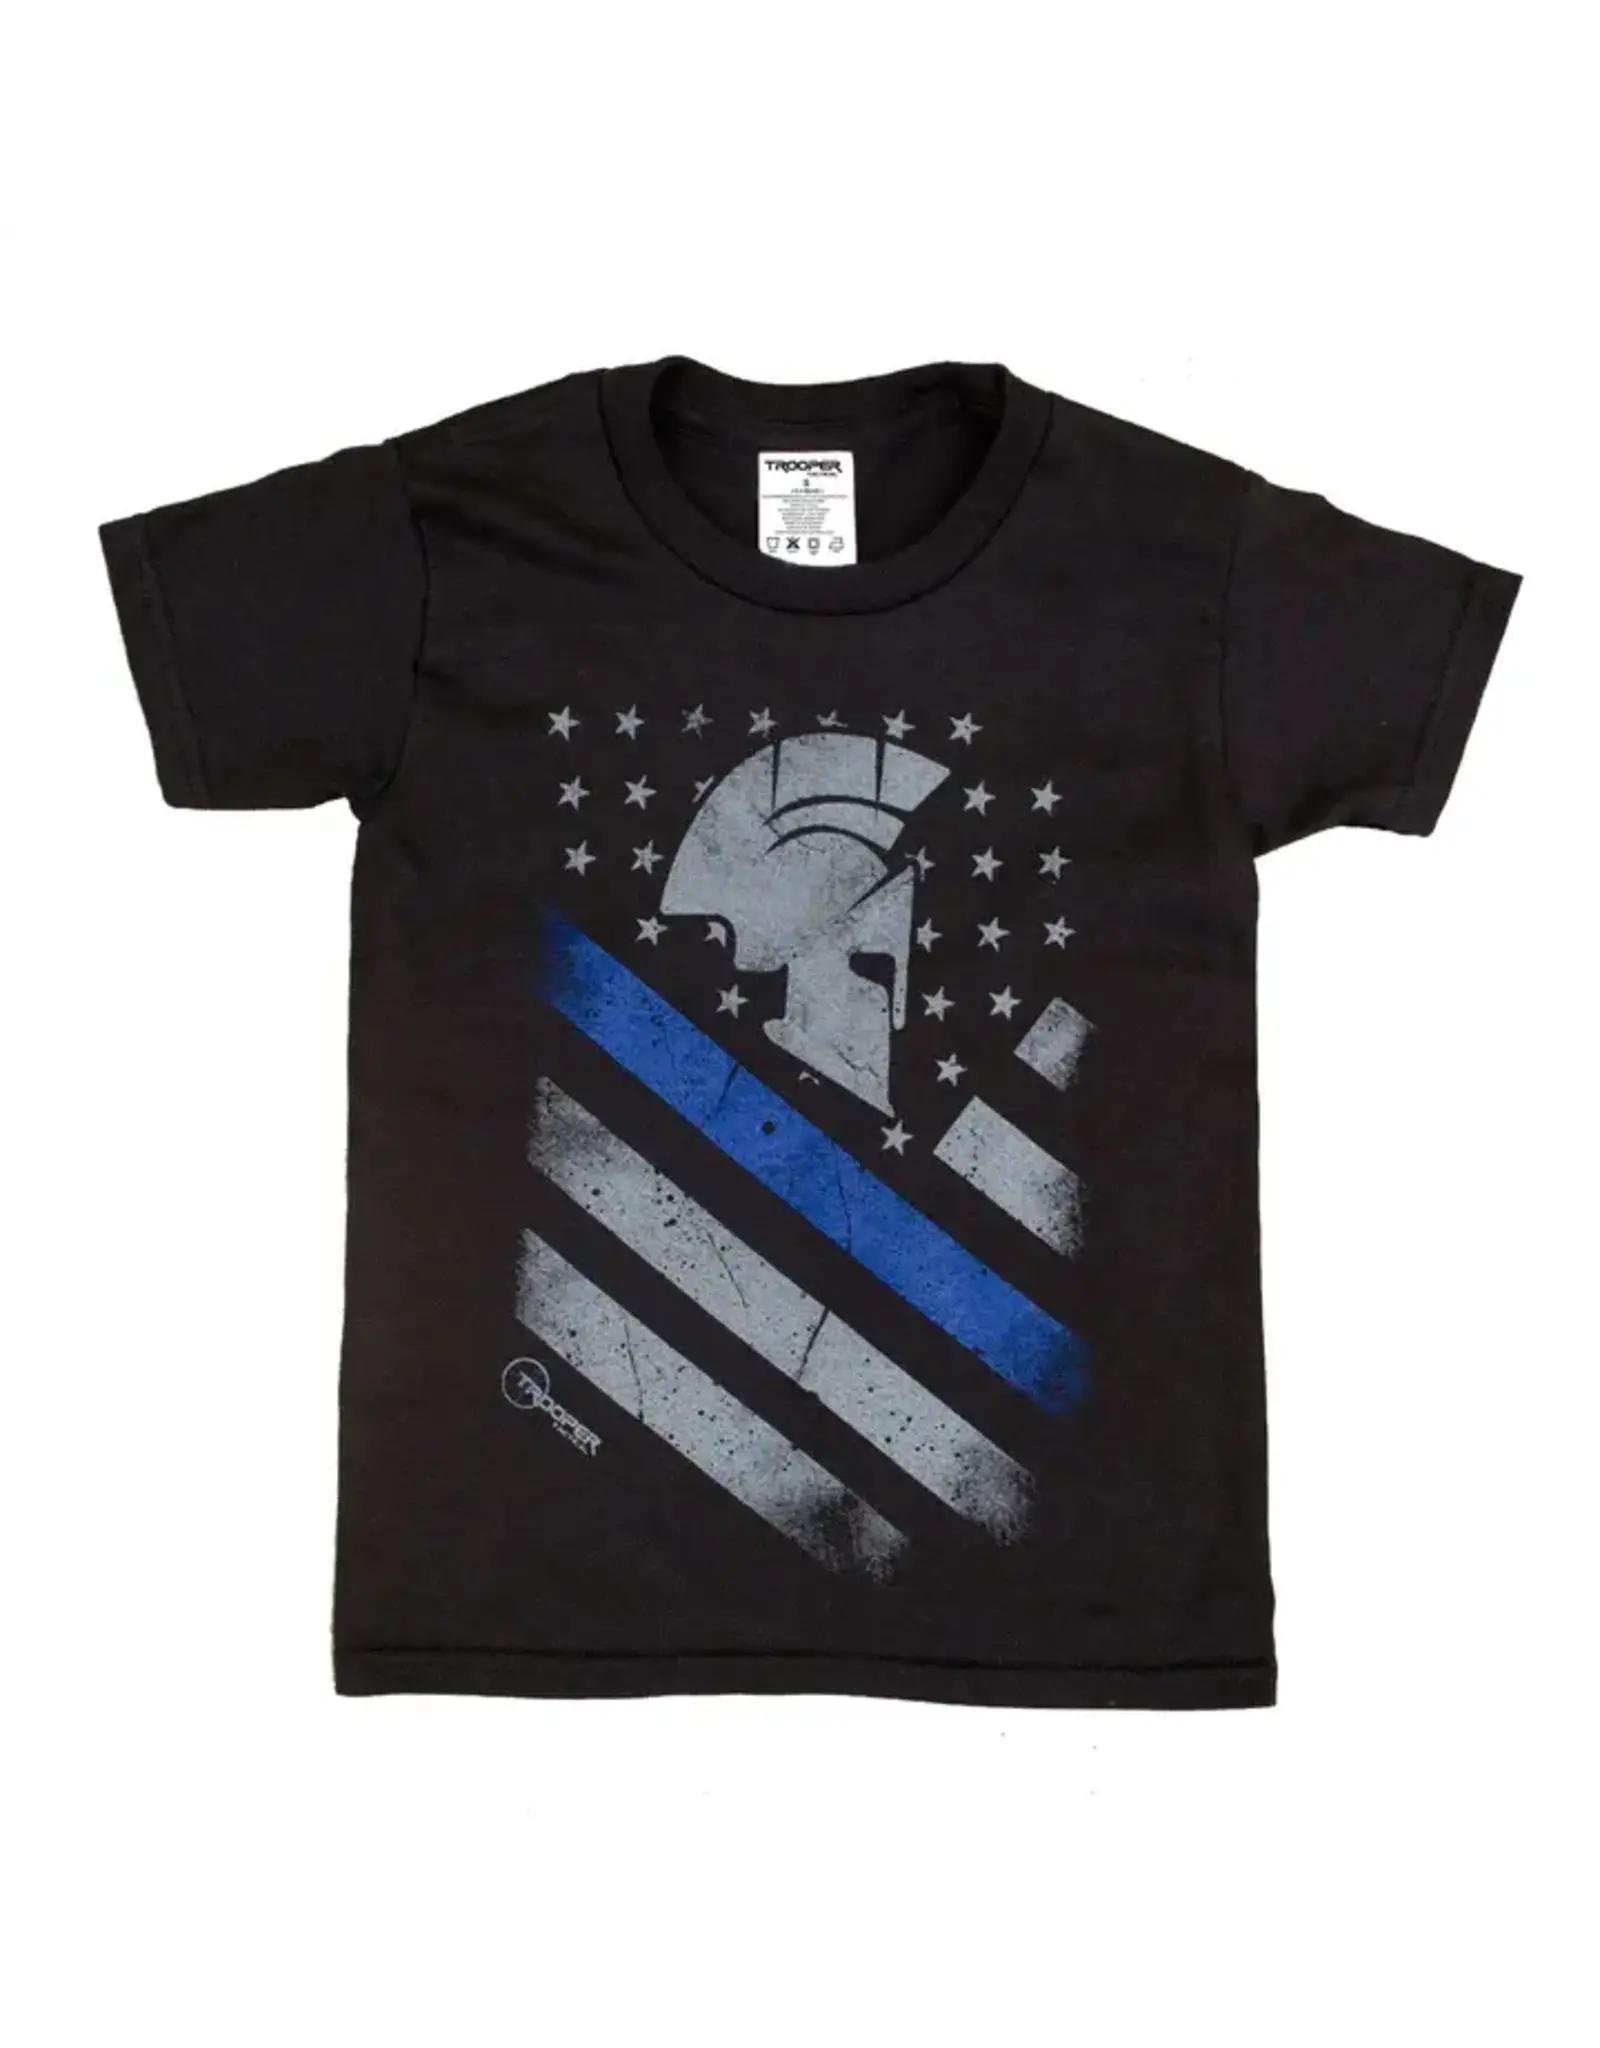 Thin Blue Line Spartan Youth T-Shirt